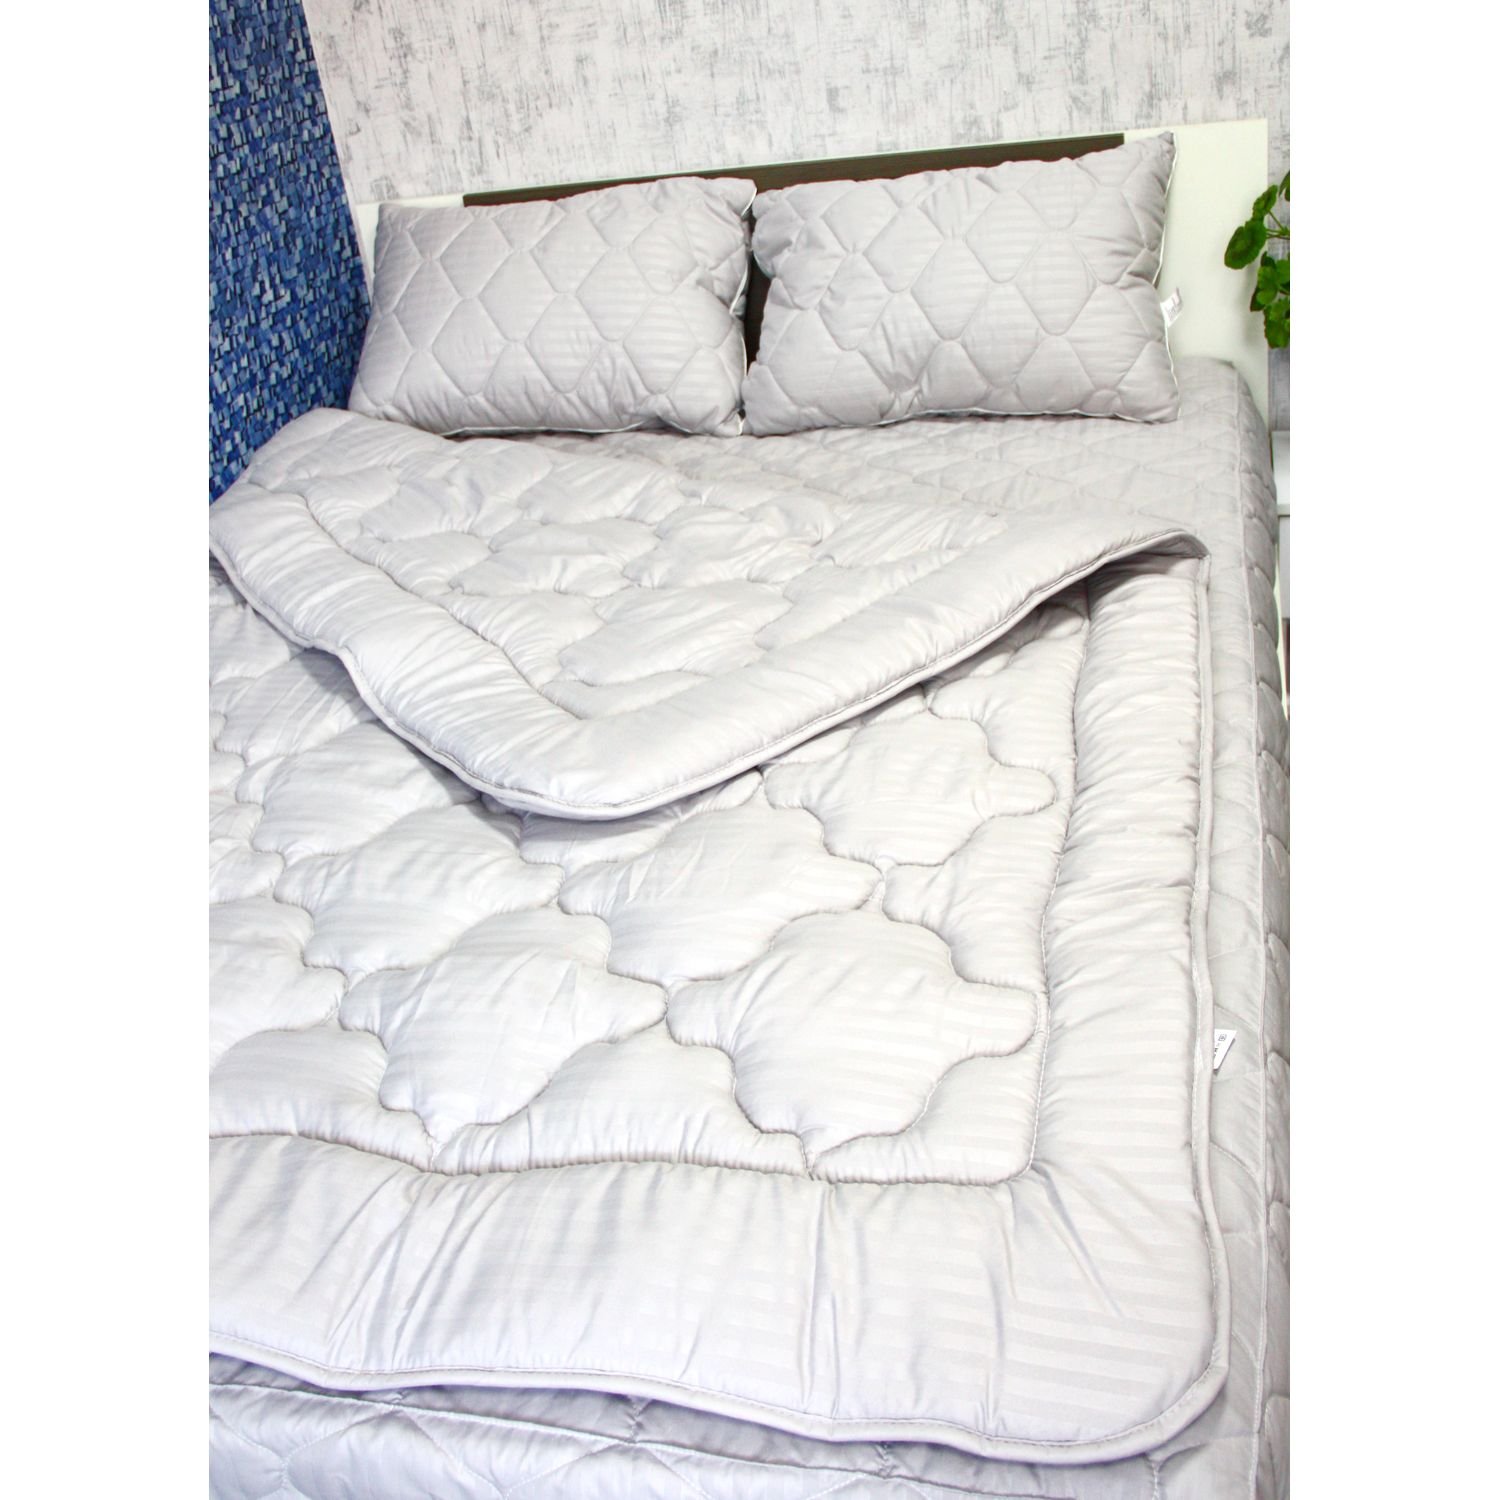 Одеяло LightHouse Soft Line Mf Stripe grey, 155х215 см, серое (602251) - фото 6